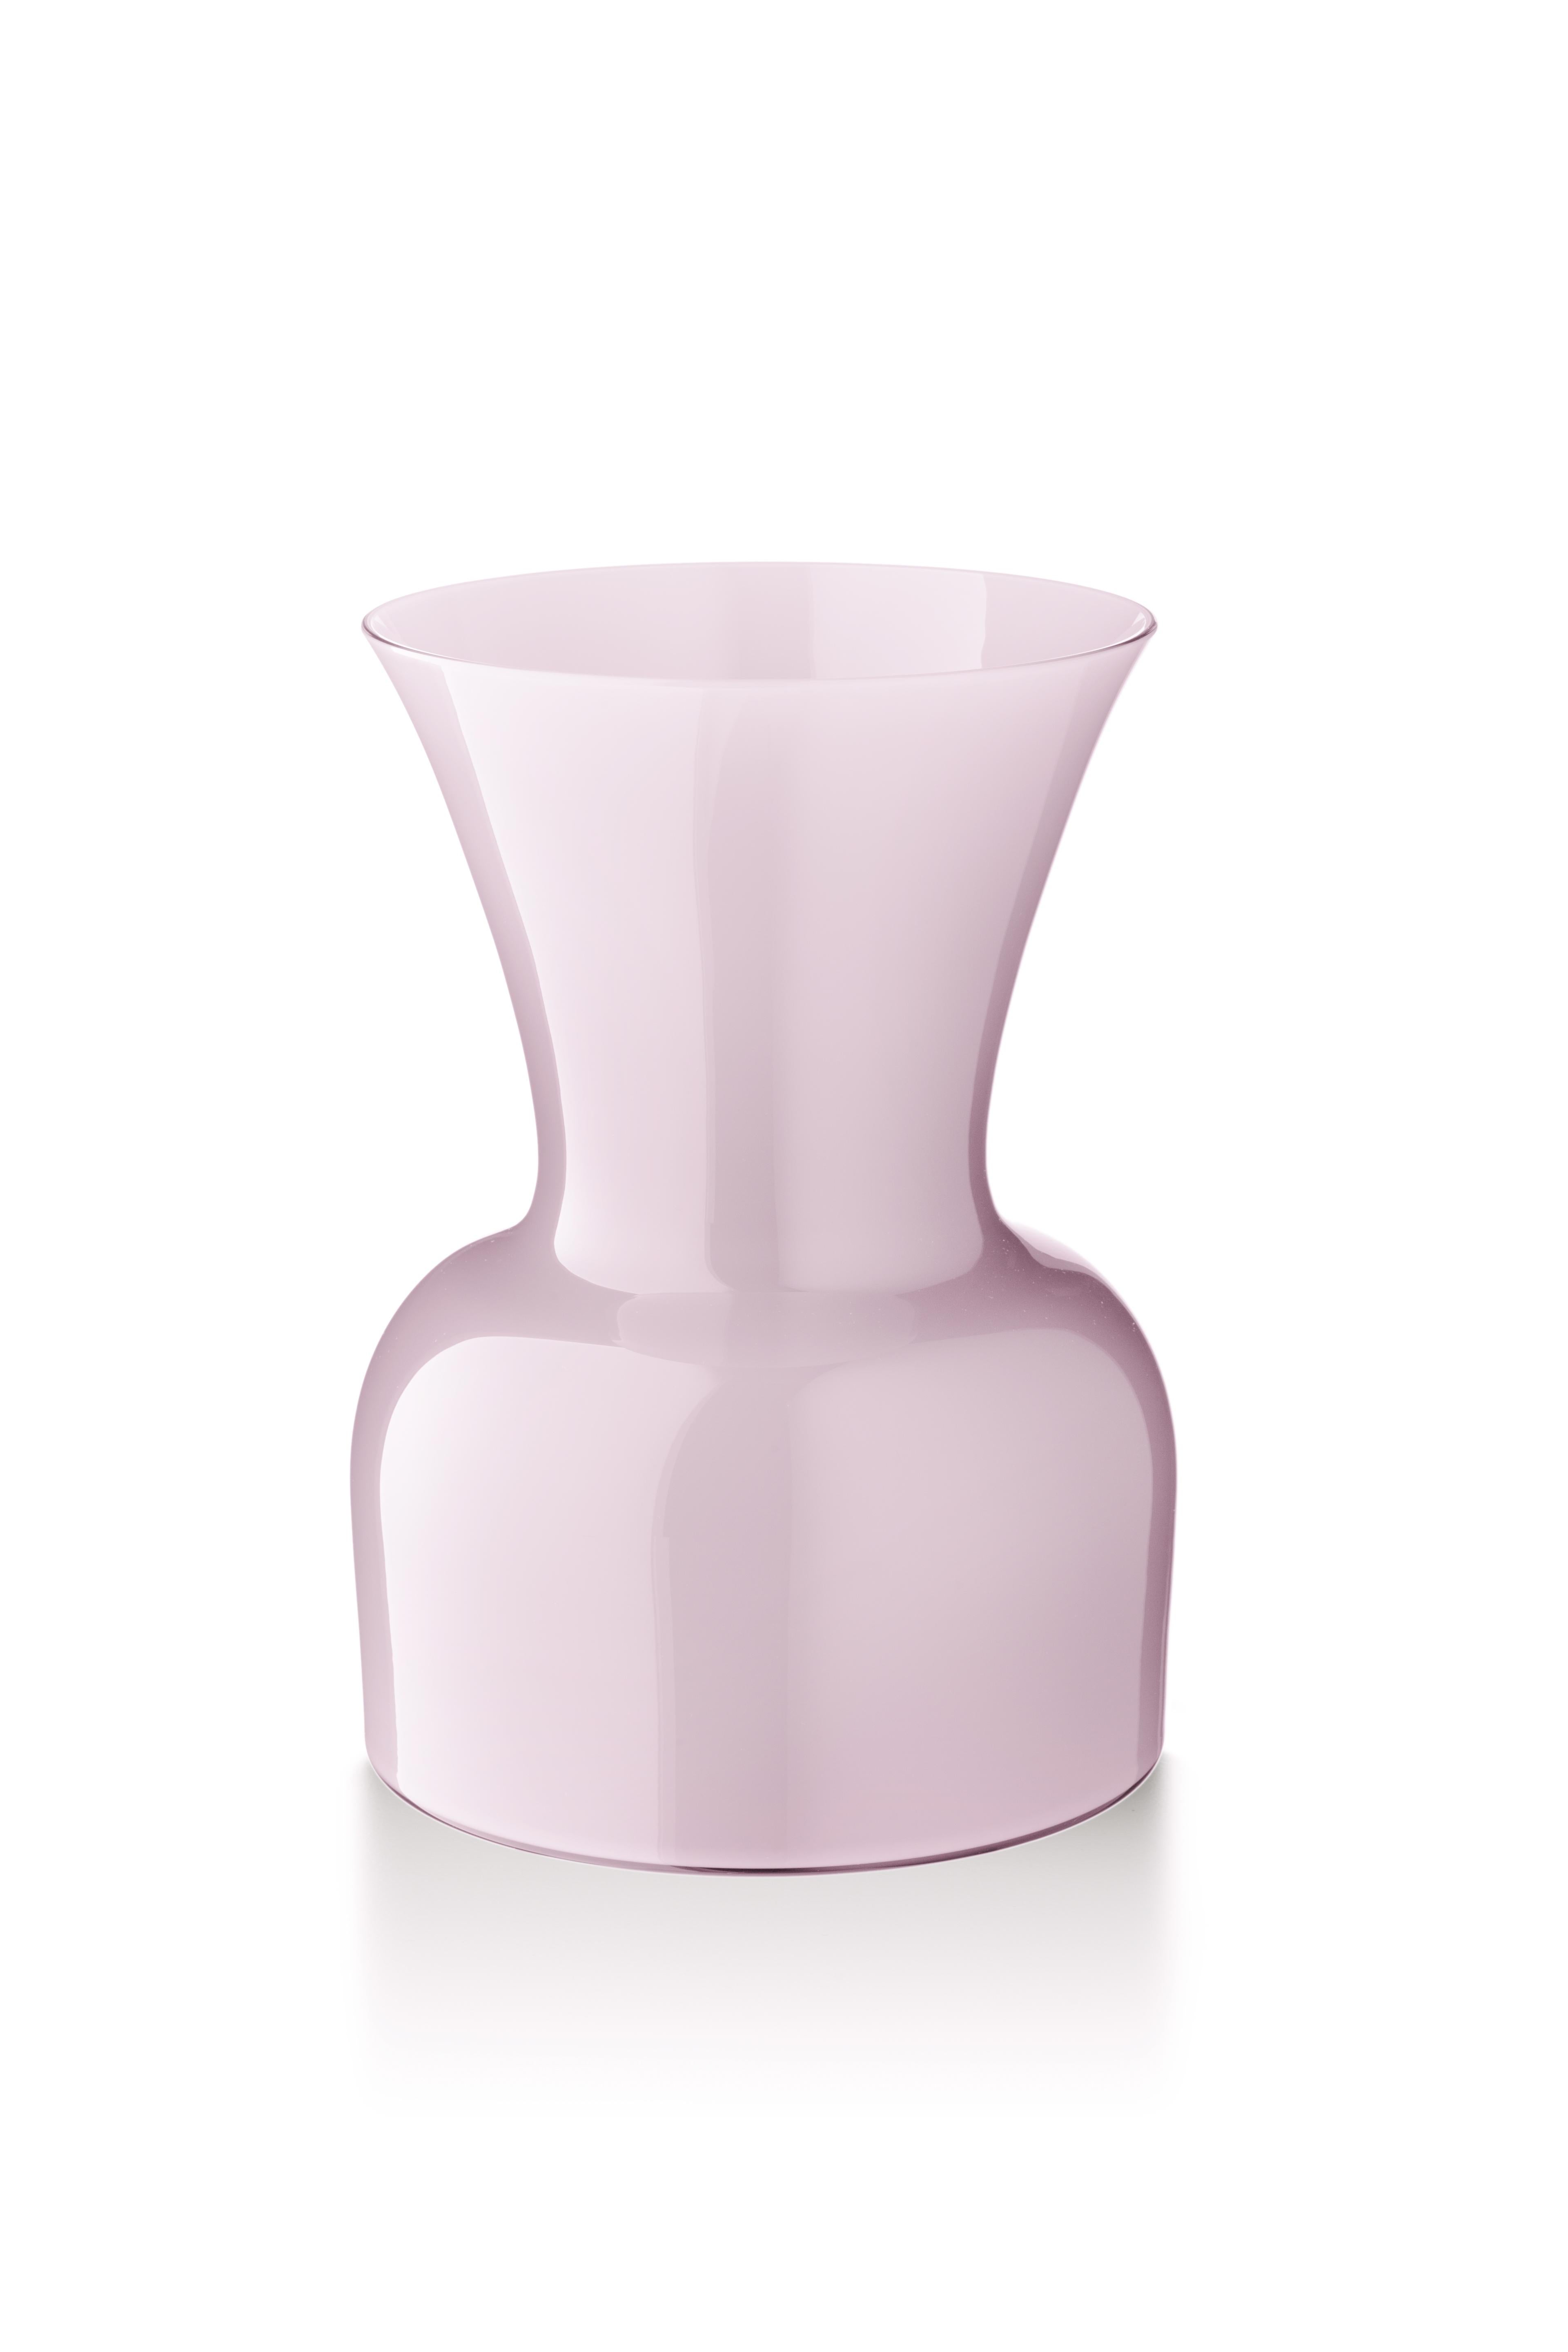 Pink (10054) Large Profili Daisy Murano Glass Vase by Anna Gili